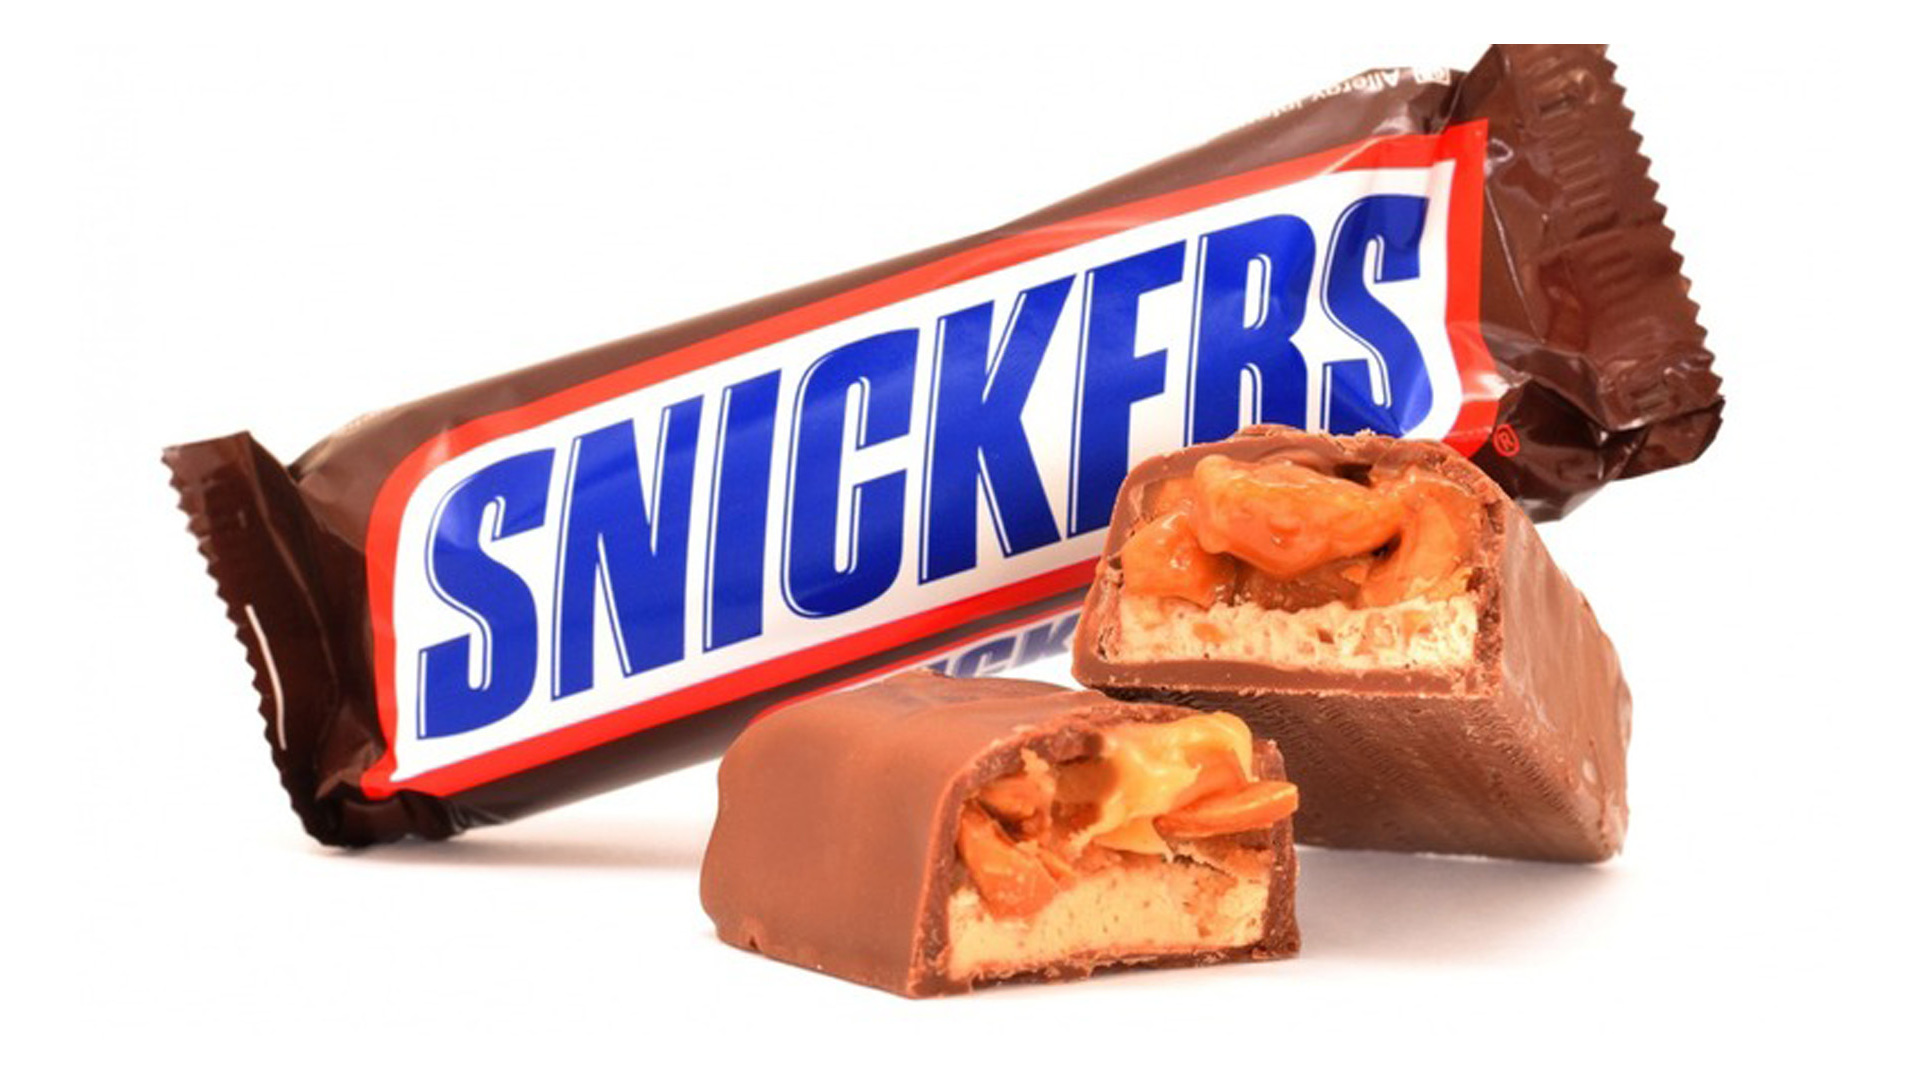 Snickers®Milkshake - Milkshake Collection in Barkingside IG6